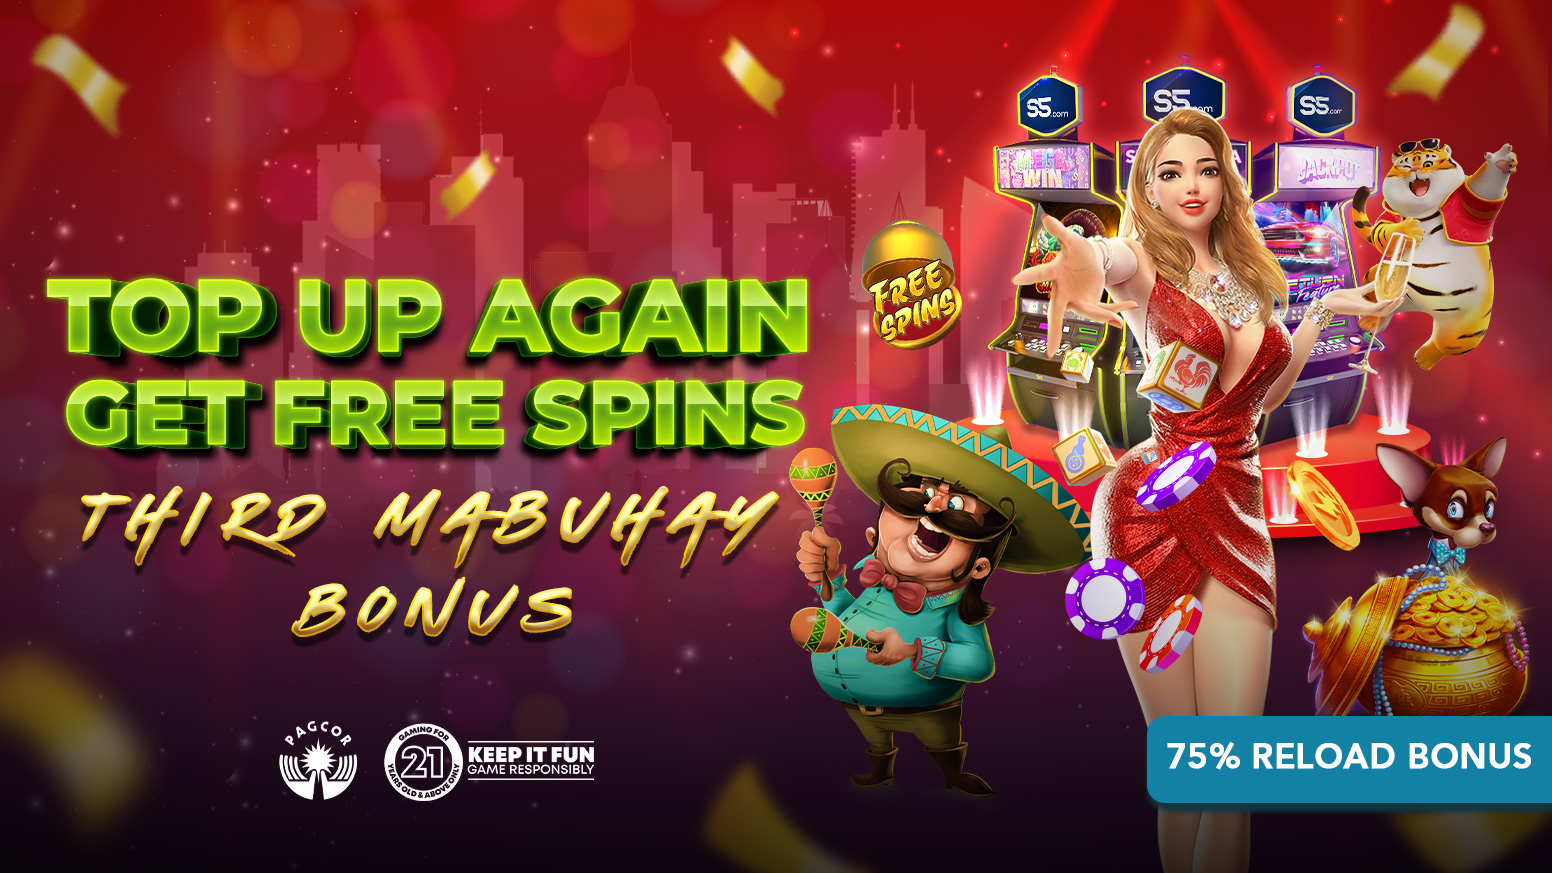 Top up again, get more free spins (75% 3rd deposit bonus)